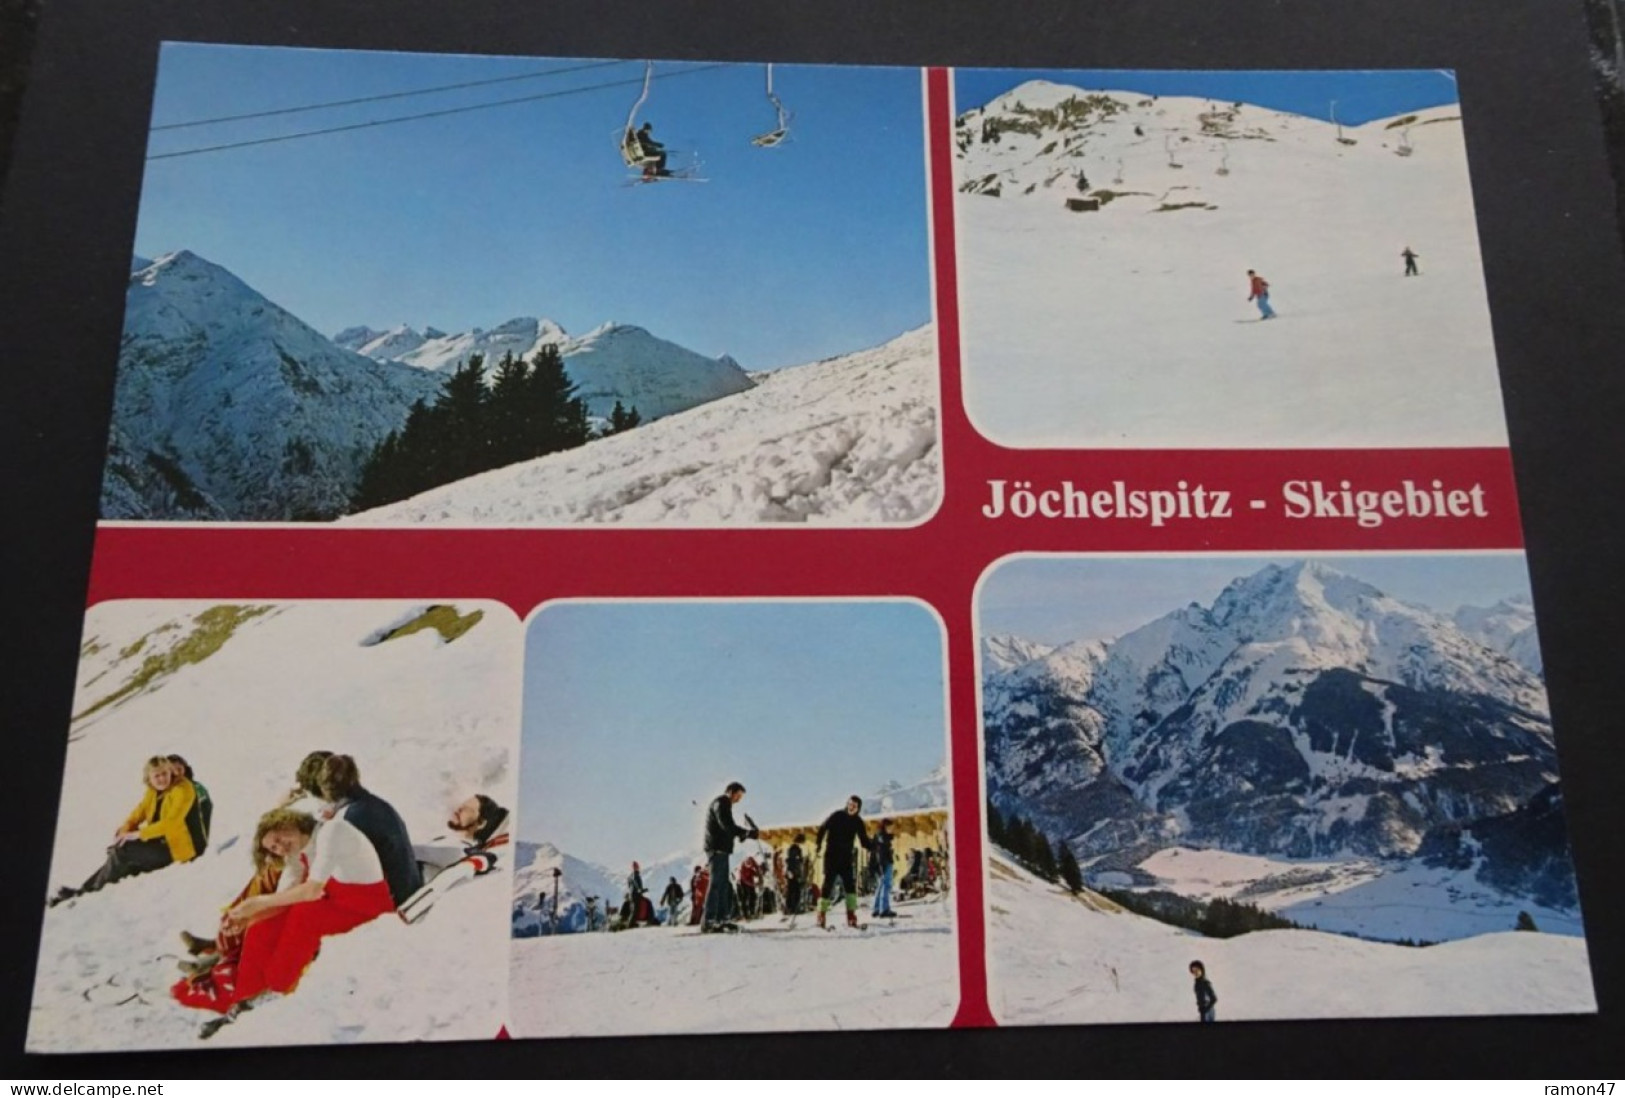 Jöchelspitz - Skigebiet - Kunstverlag Franz Milz, Reutte - # W 220/74 - Lechtal